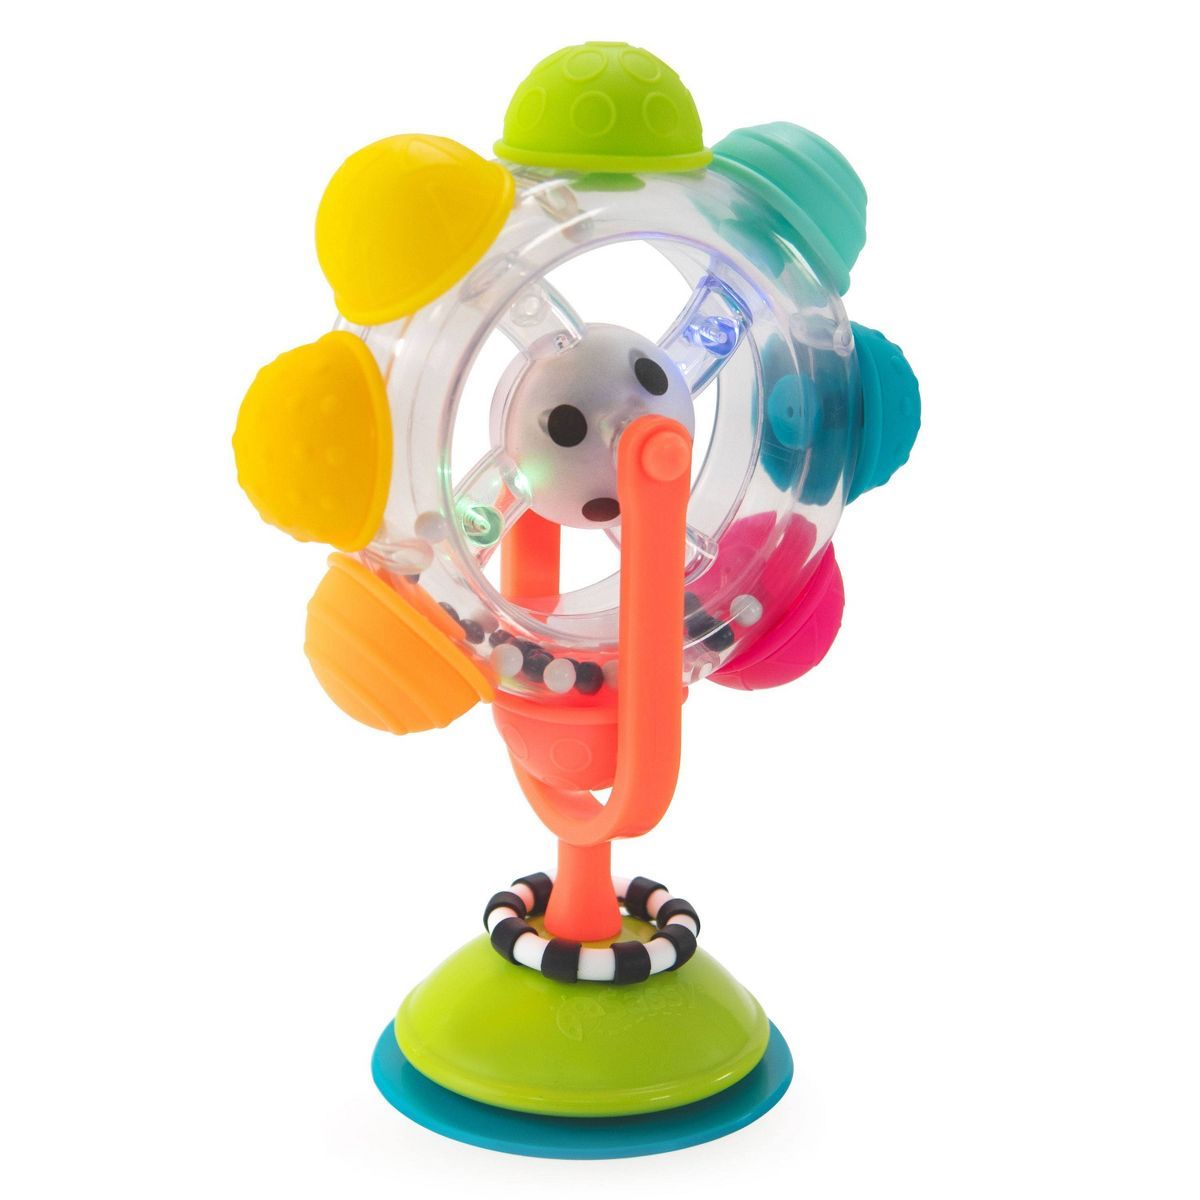 Sassy Toys Rainbow Reel Tray Toy | Target